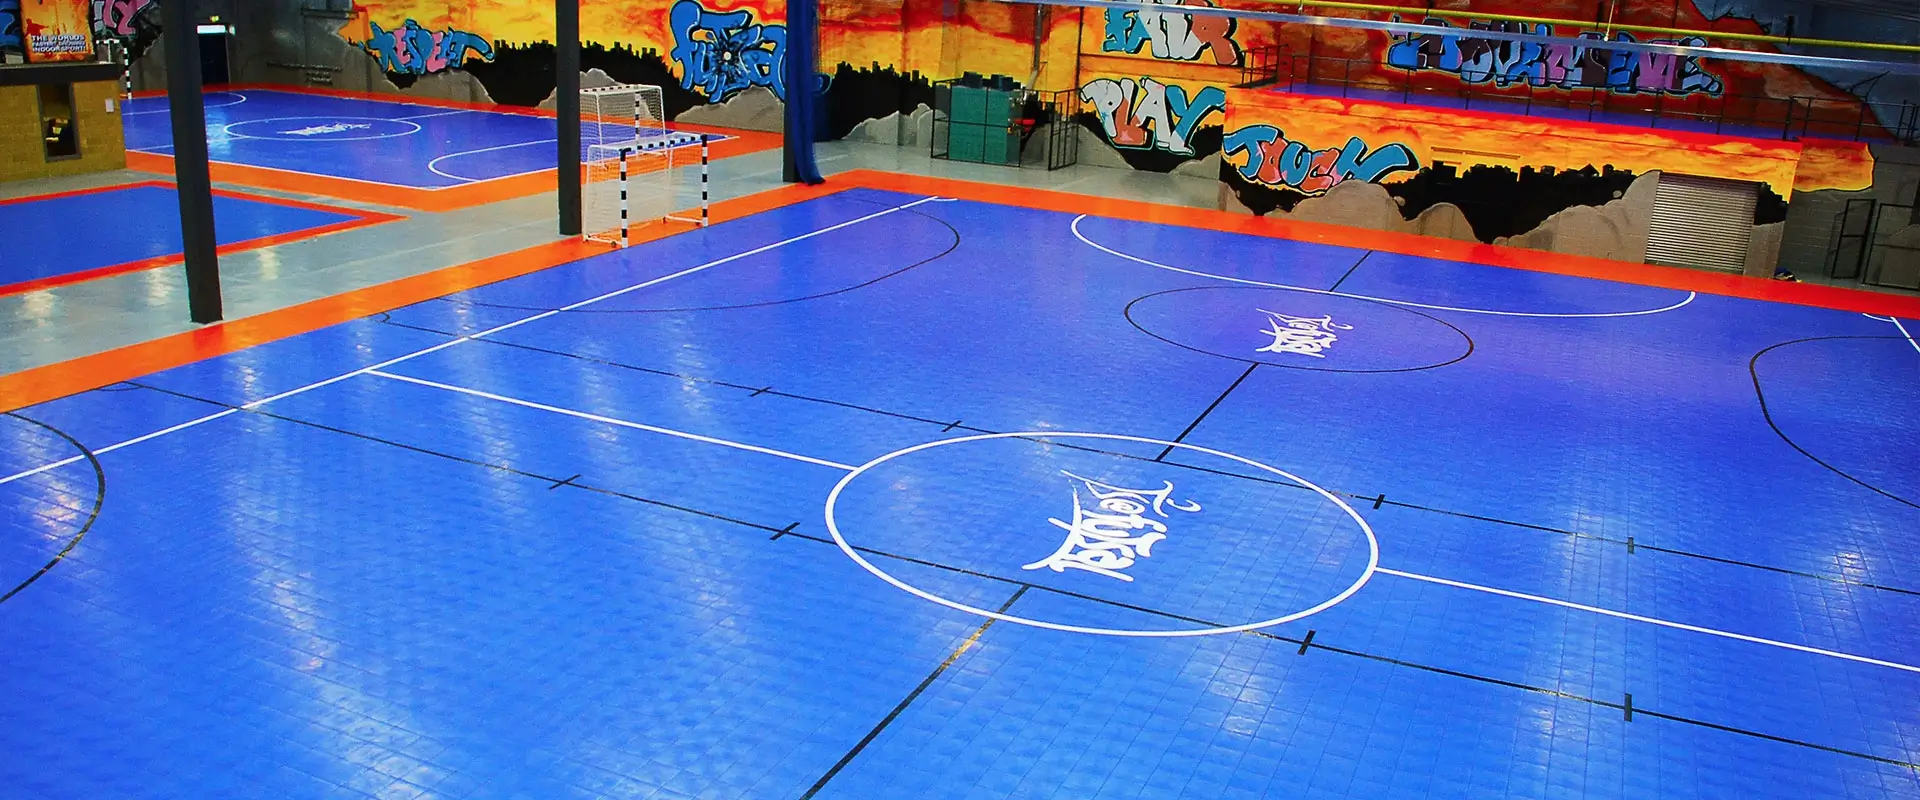 Futsal facility in England